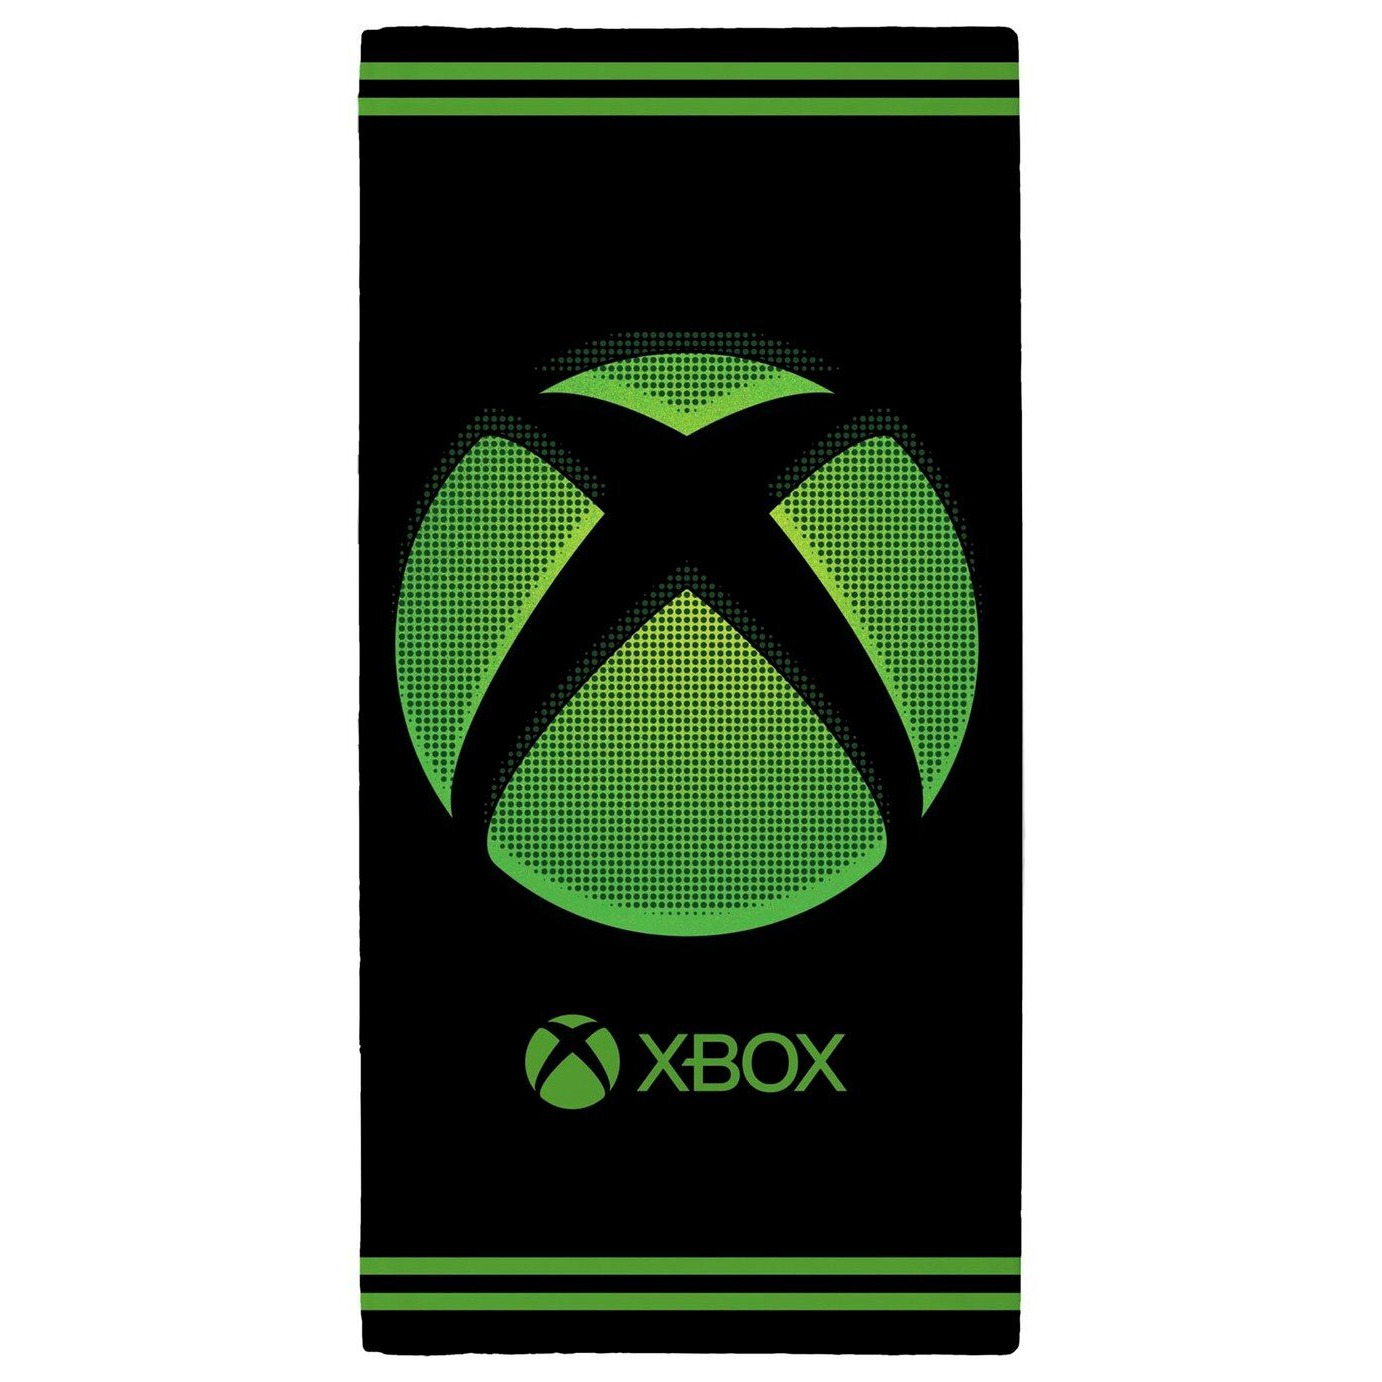 Xbox Sphere Beach Towel - Black & Green - image 1